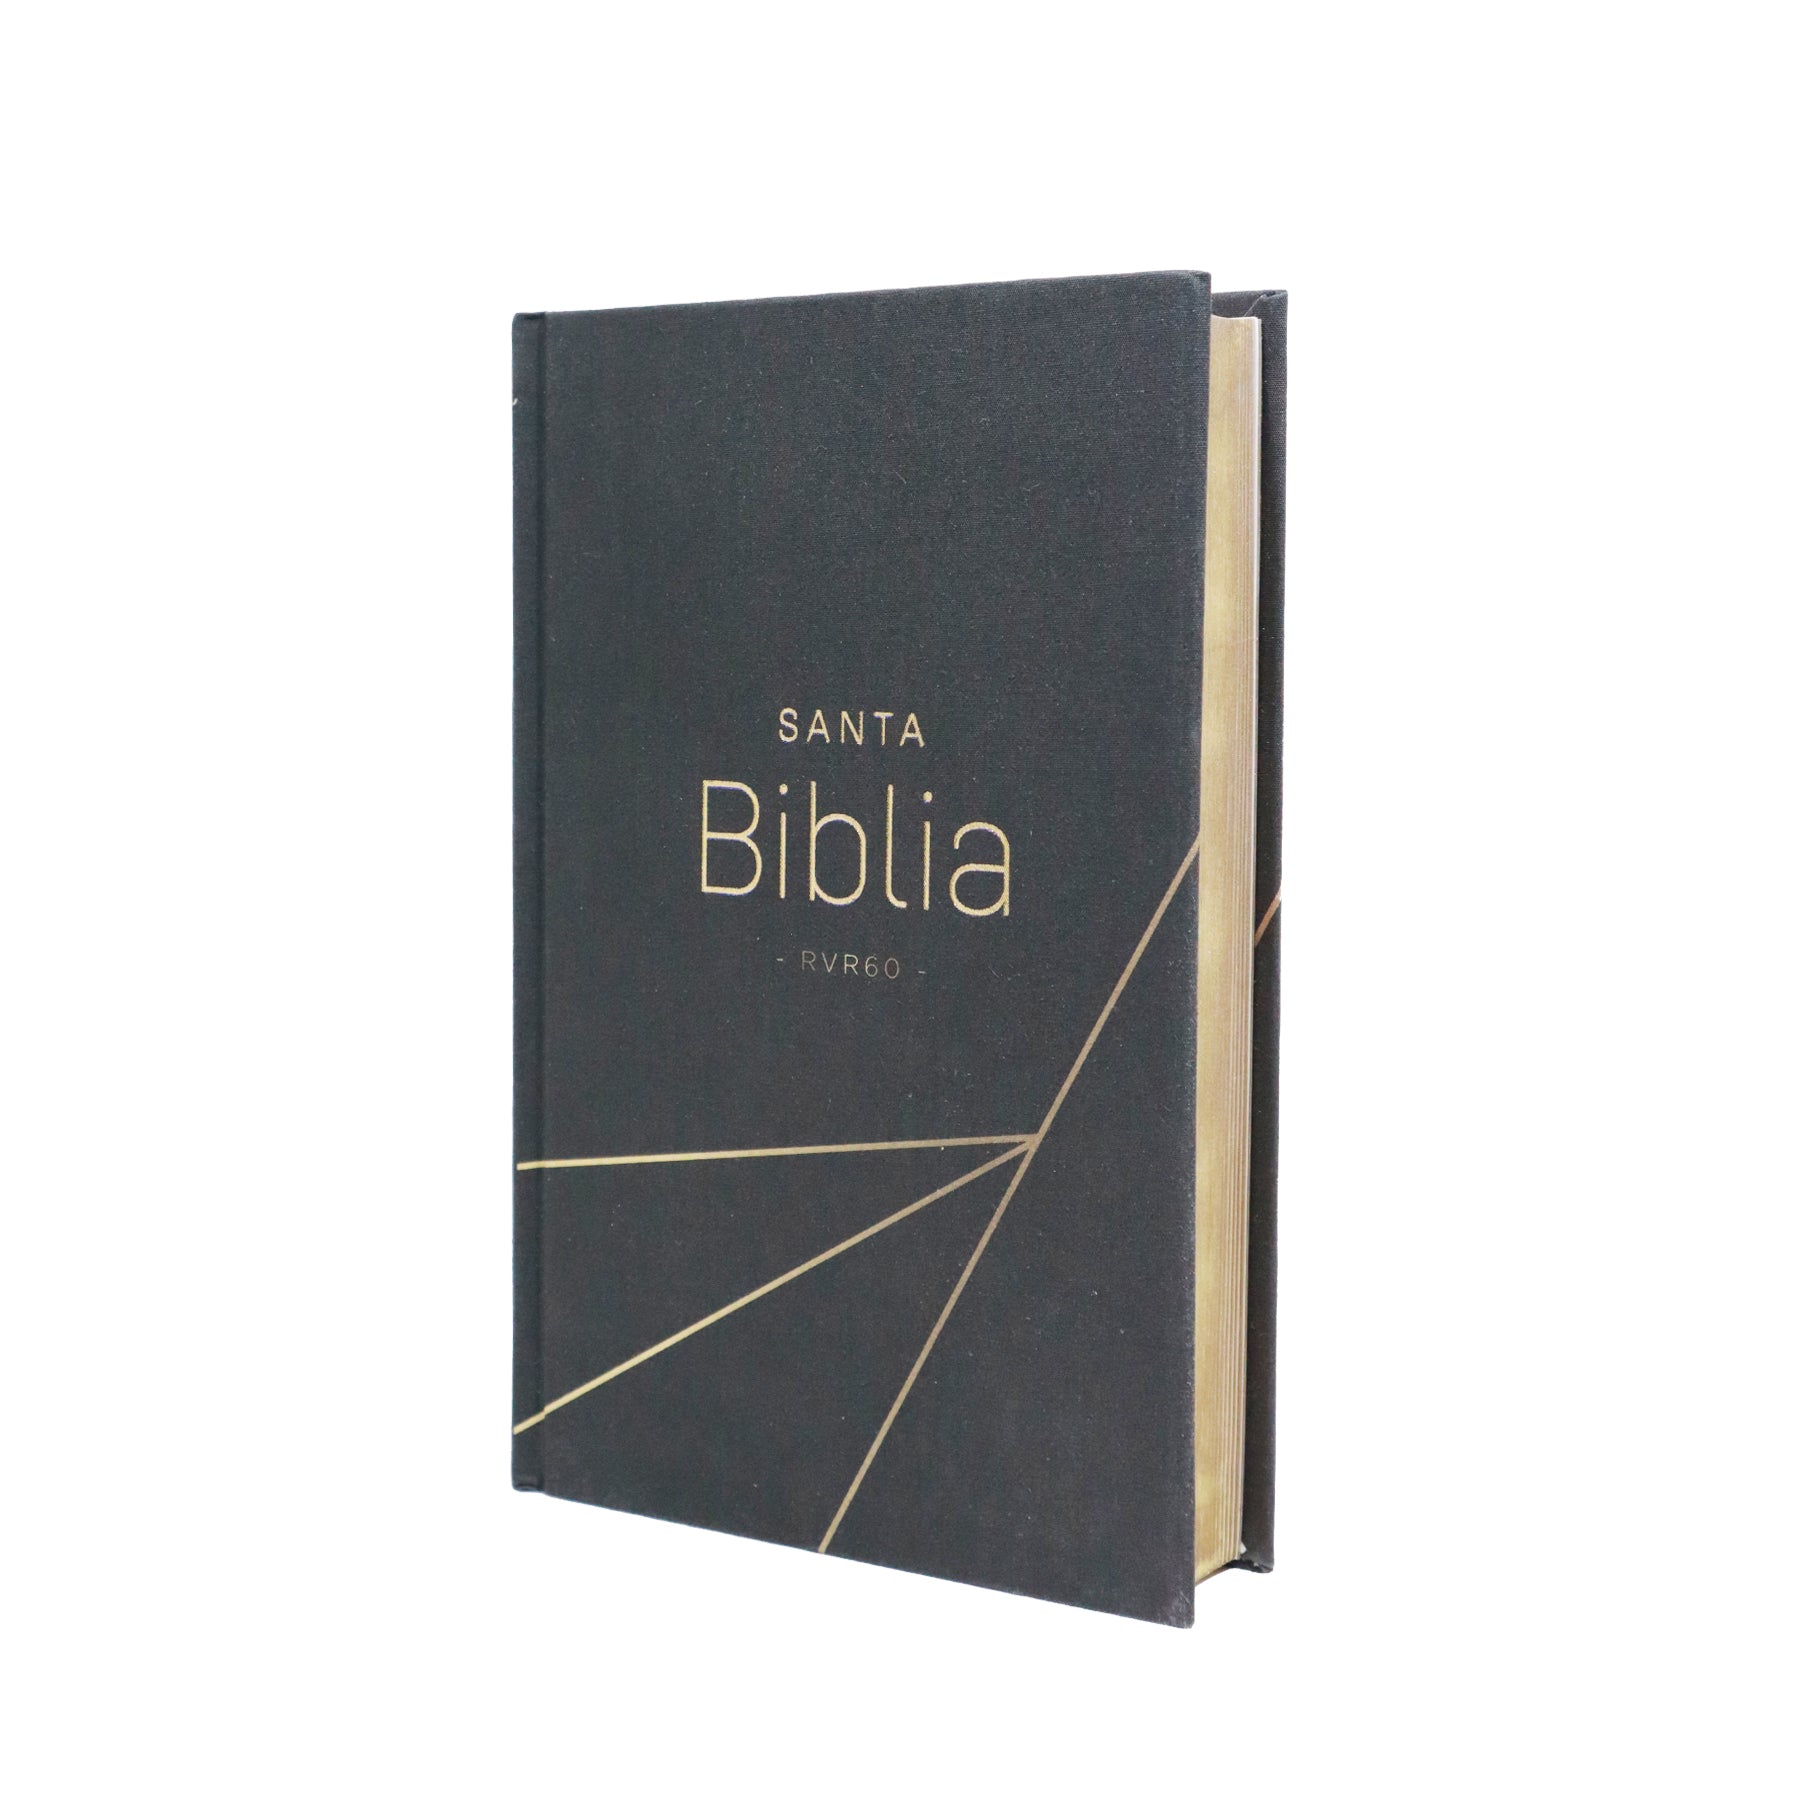 BIBLIA REINA VALERA 1960 LETRA GRANDE MANUAL TAPA DURA/NEGRO TELA